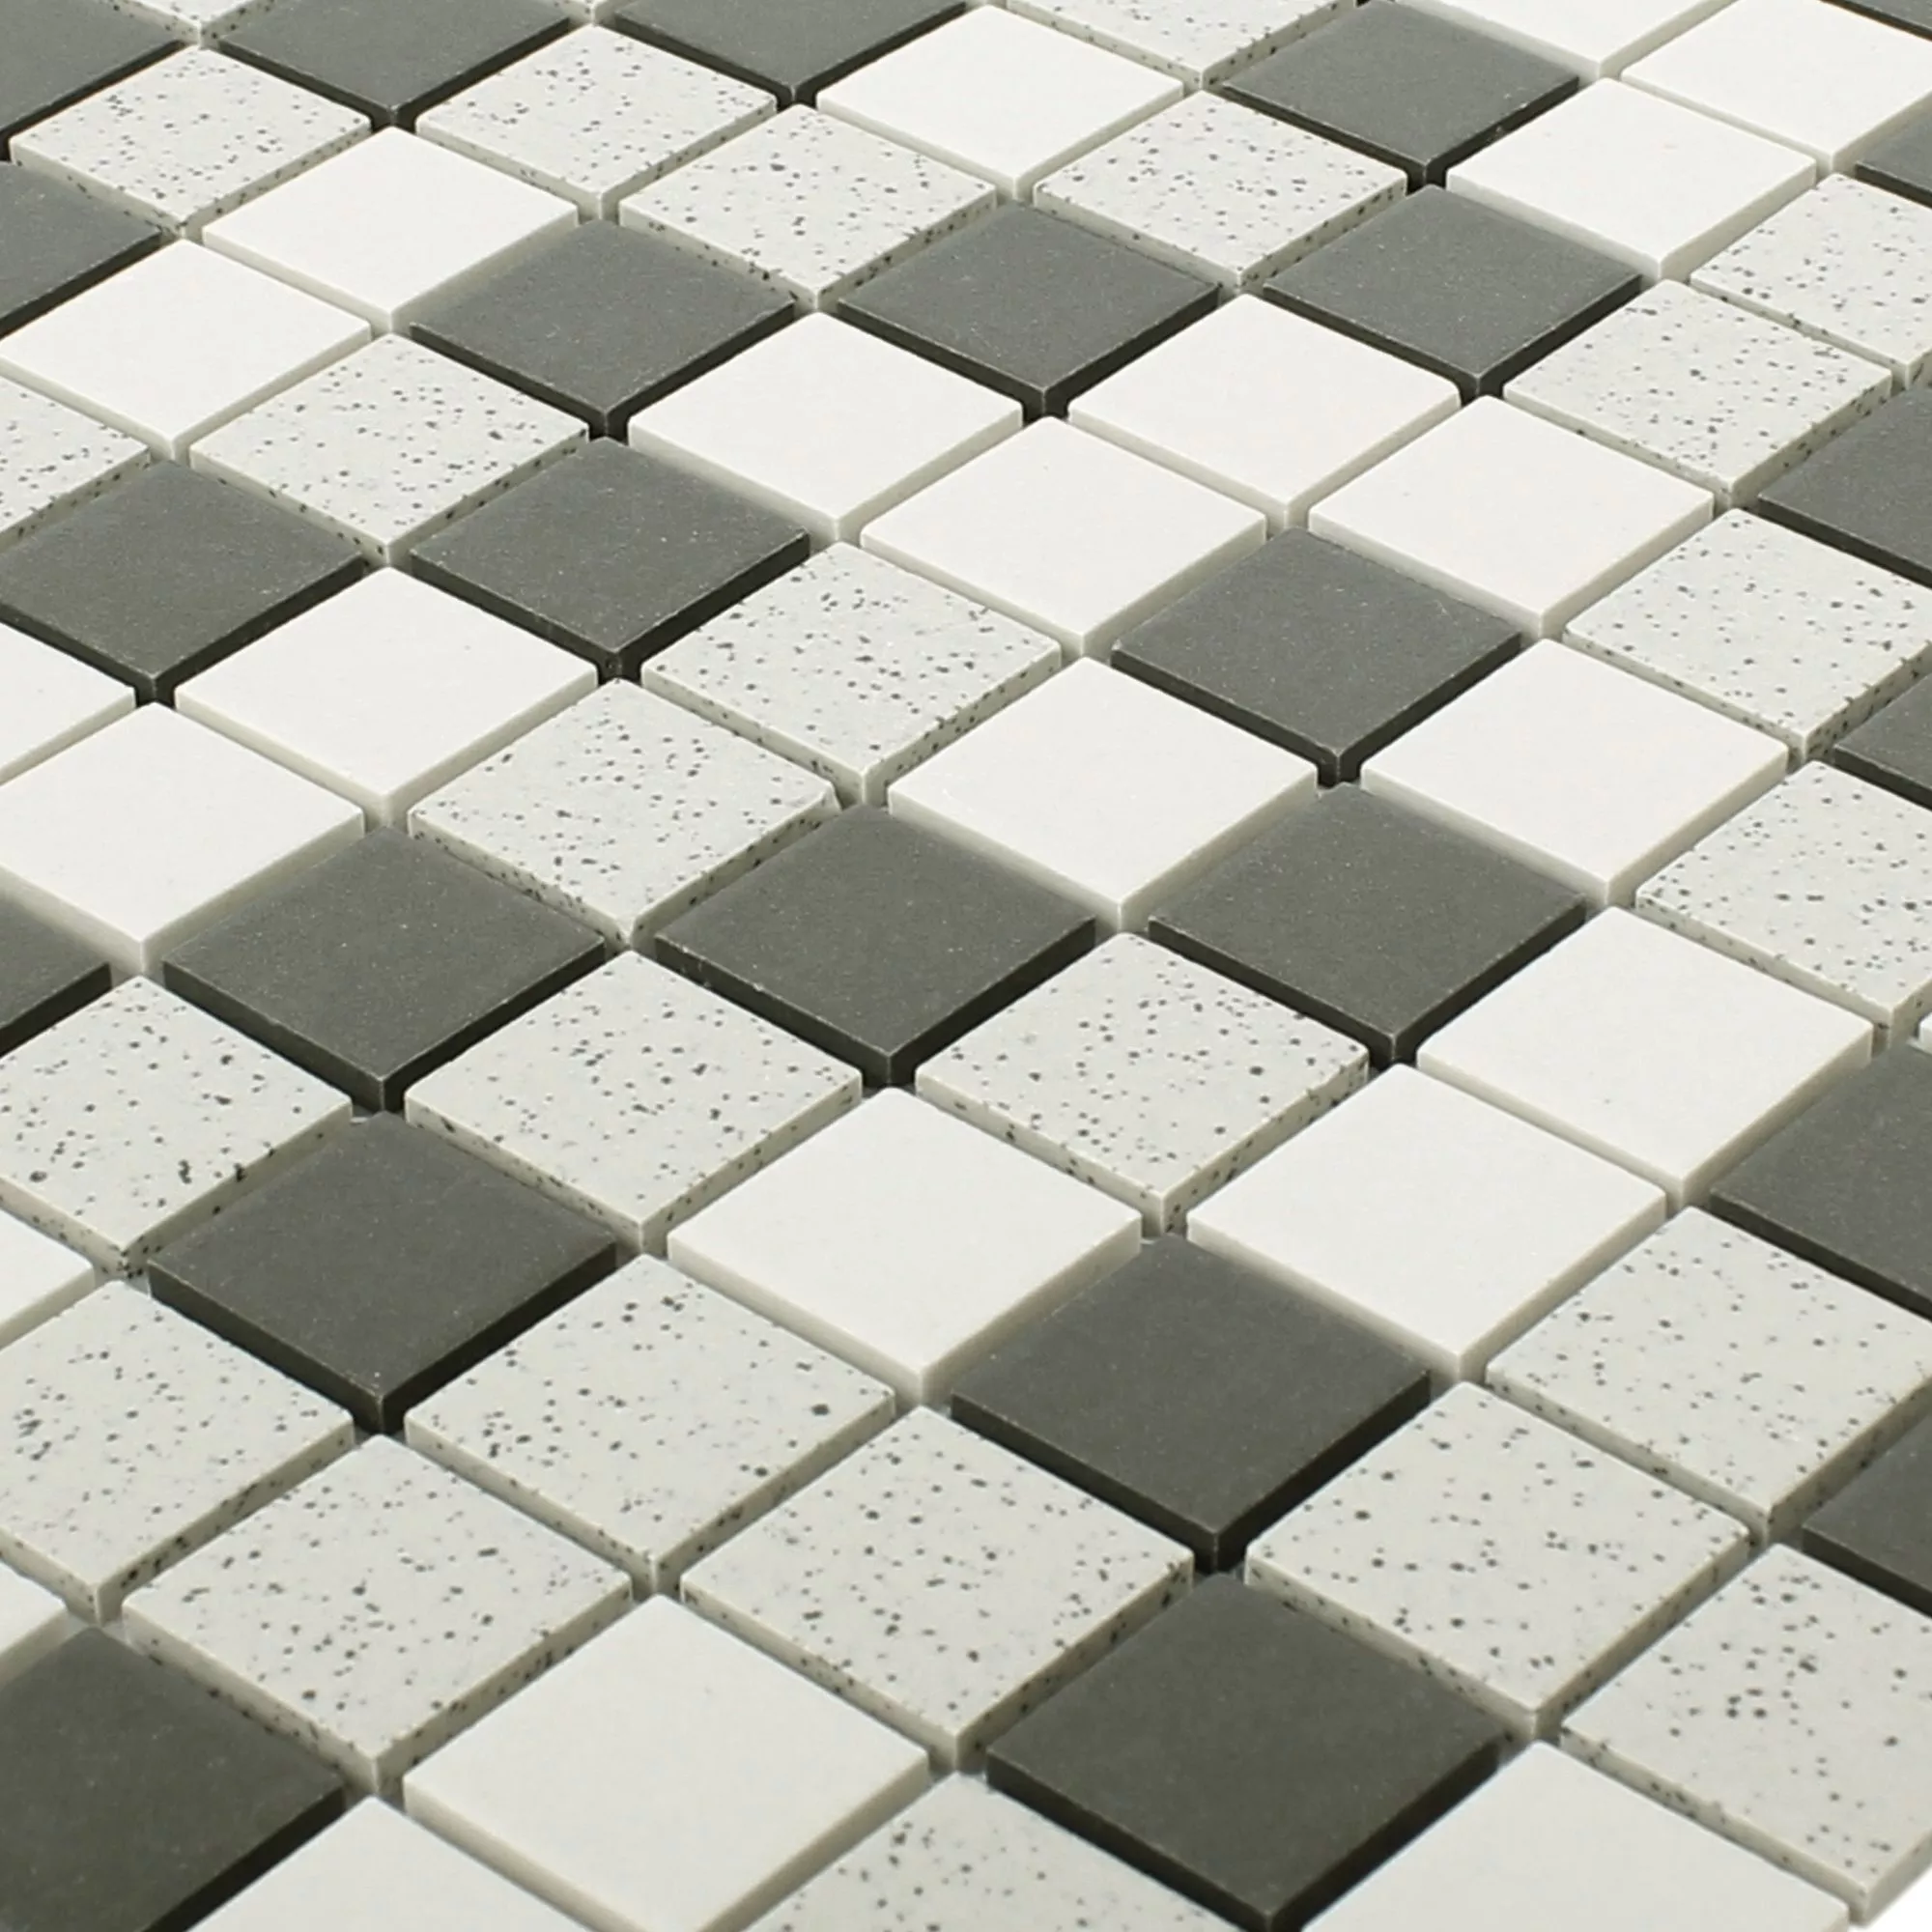 Sample Ceramic Mosaic Tiles Monforte Black Grey Square